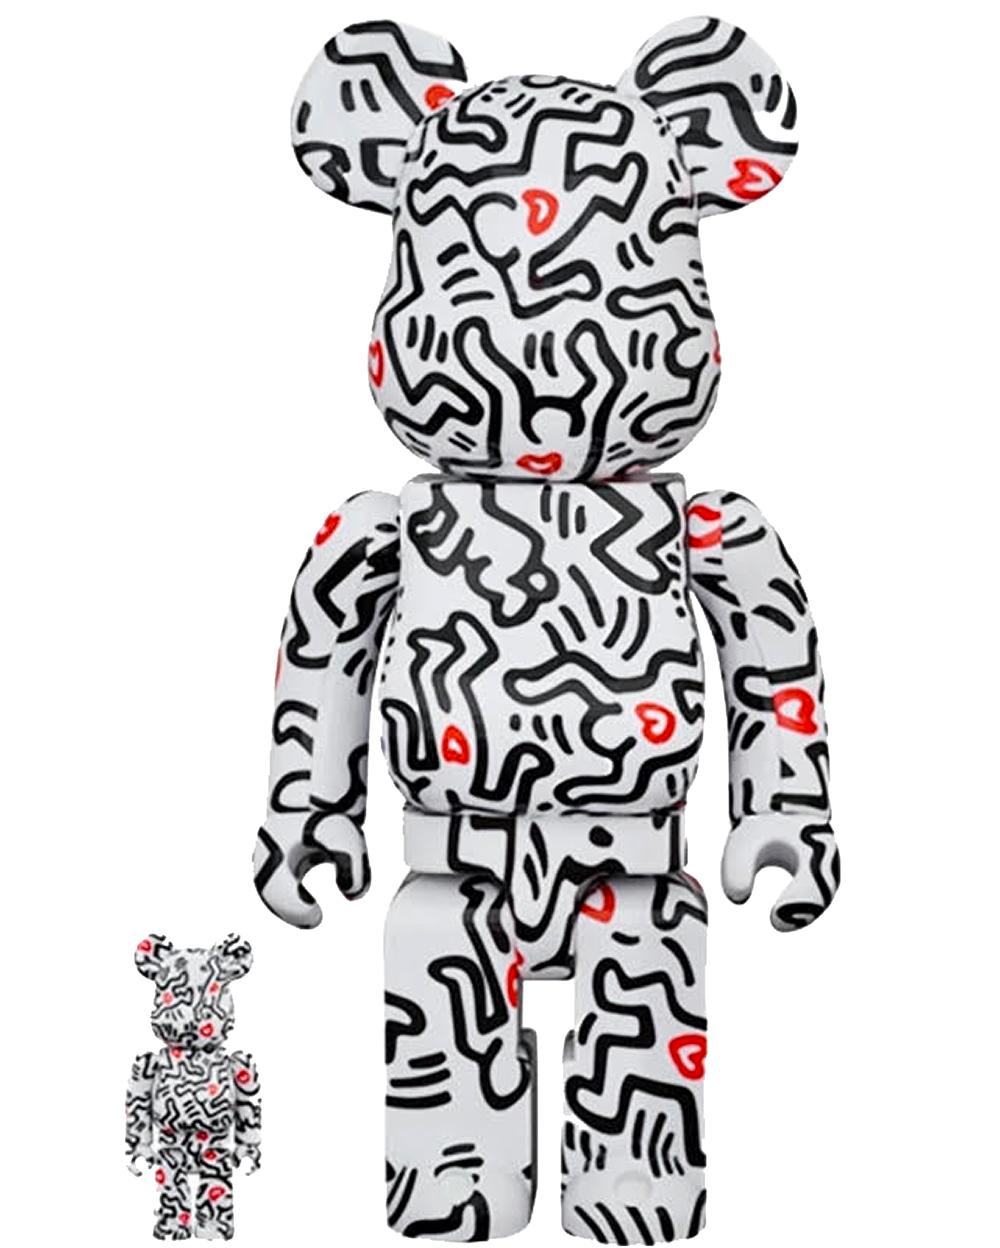 Keith Haring Bearbrick 400 % Kunstspielzeug  (Keith Haring BE@RBRICK) 